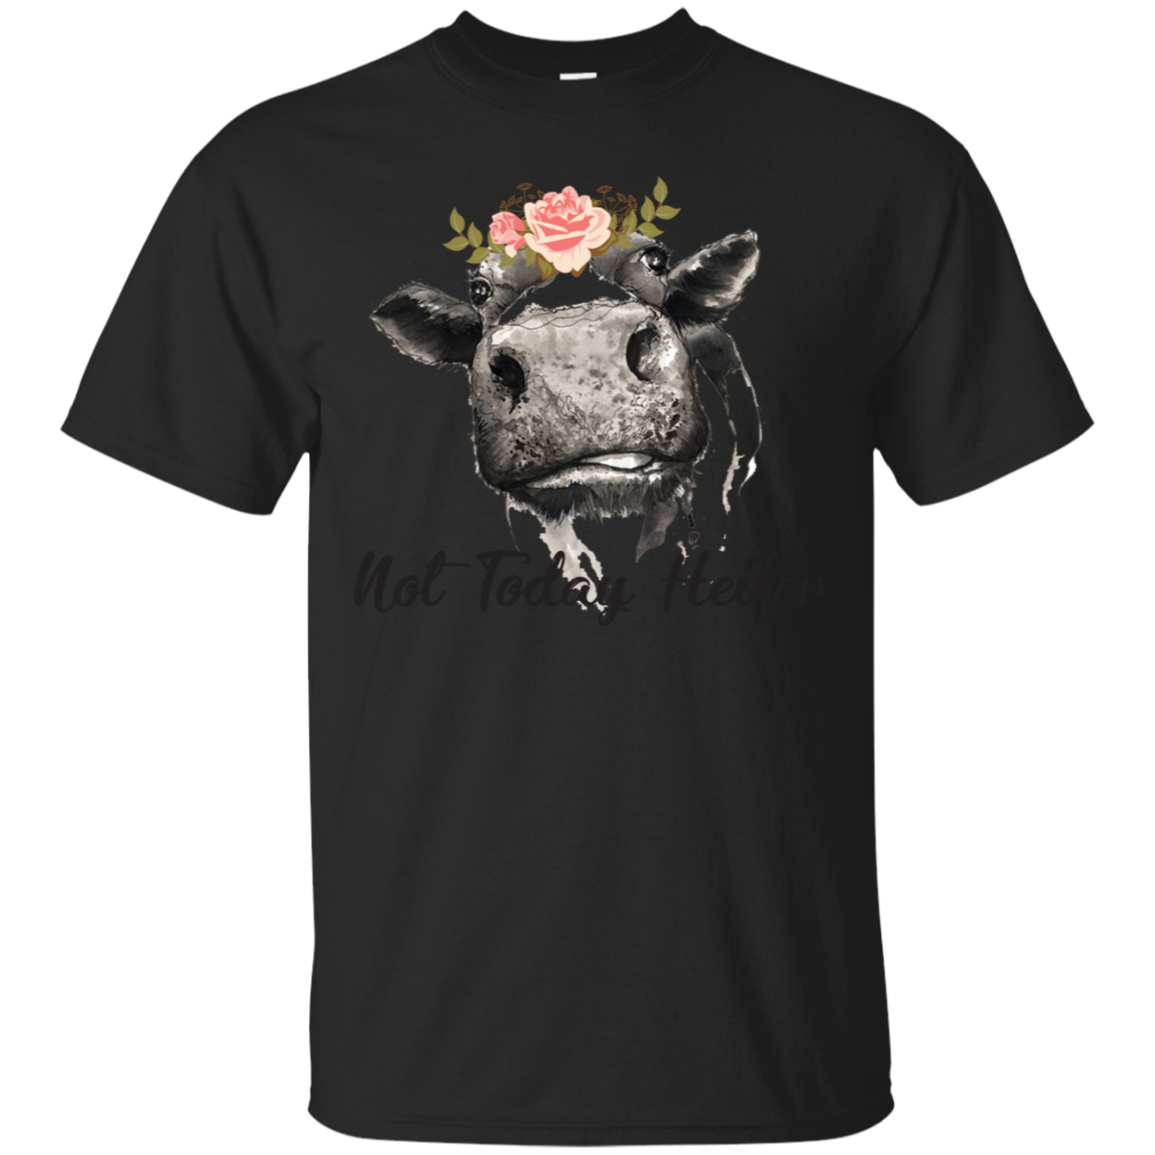 Cows Not Today Heifer Black T-Shirt for Men S-6XL - T-Shirts, Tank Tops